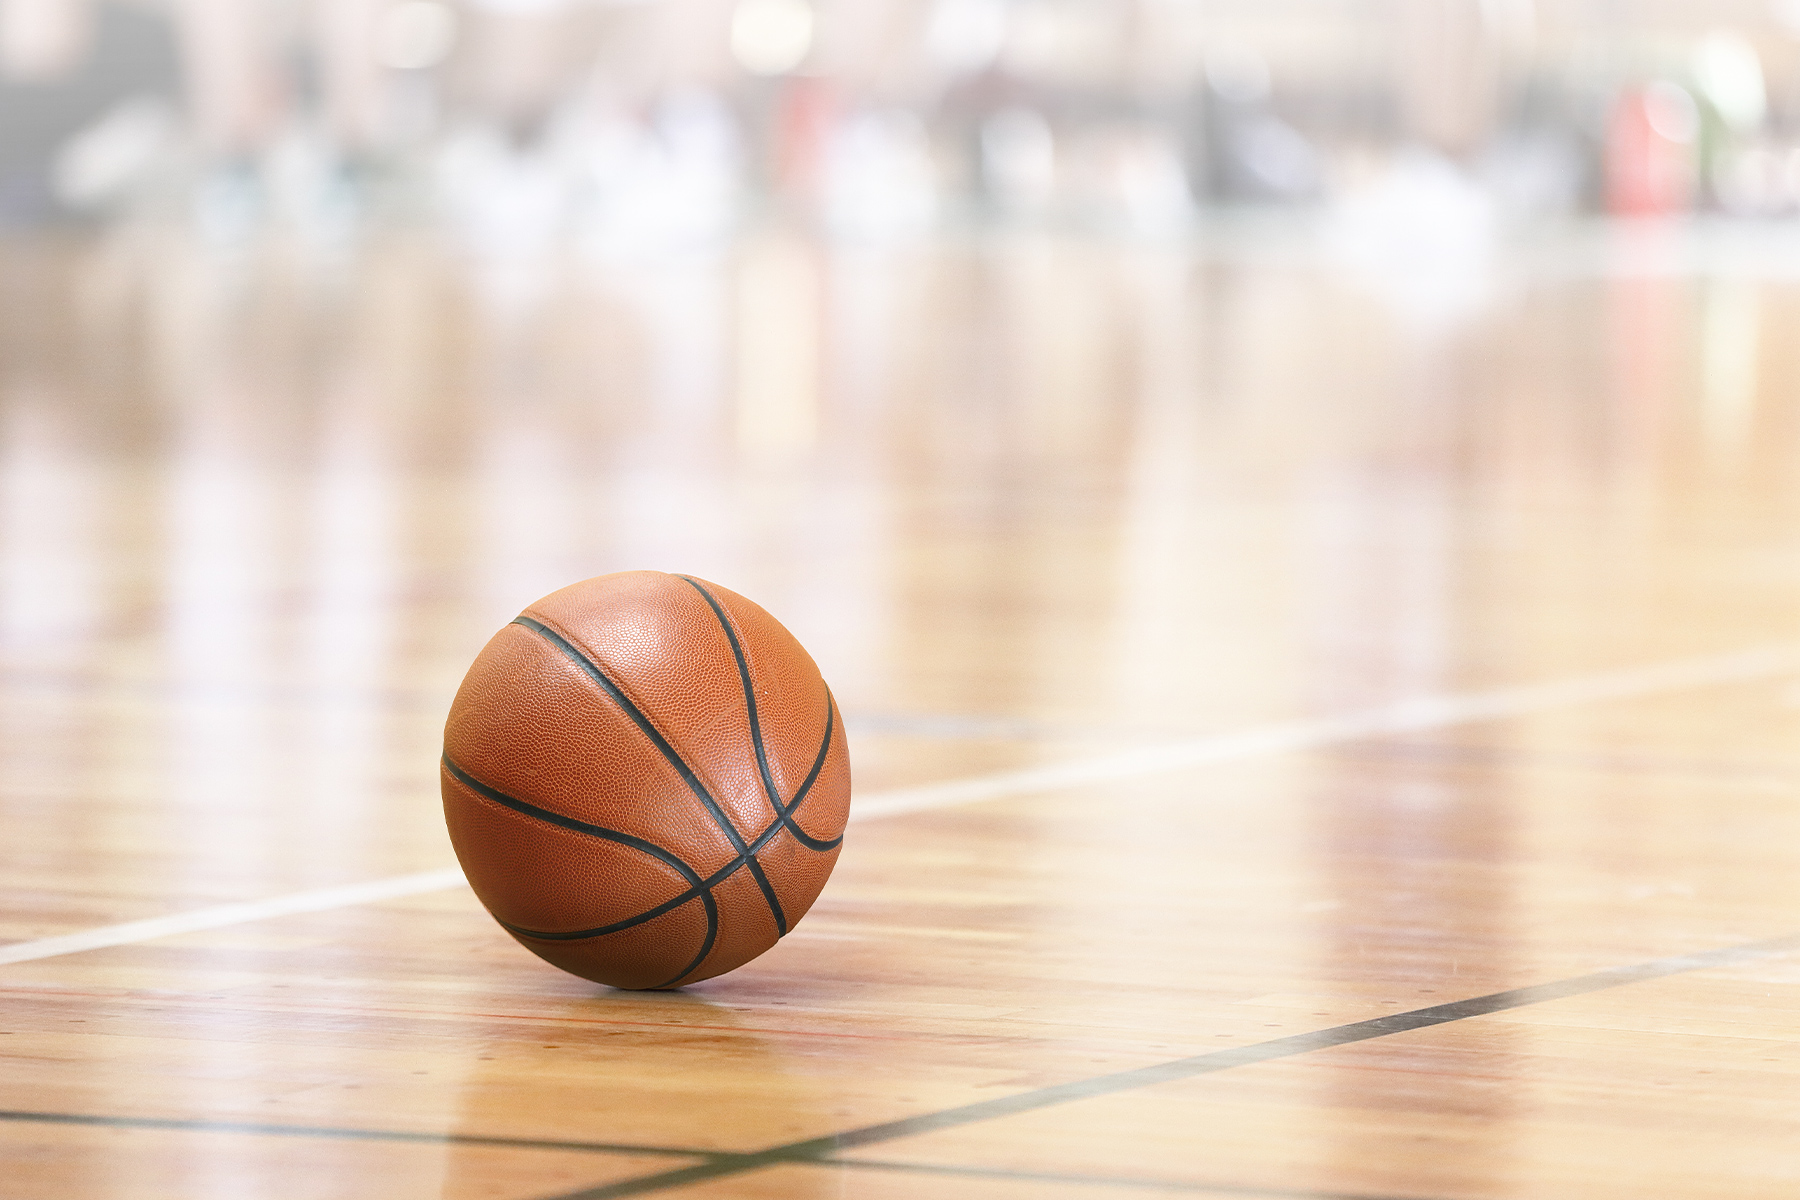 Basketball on Court Floor